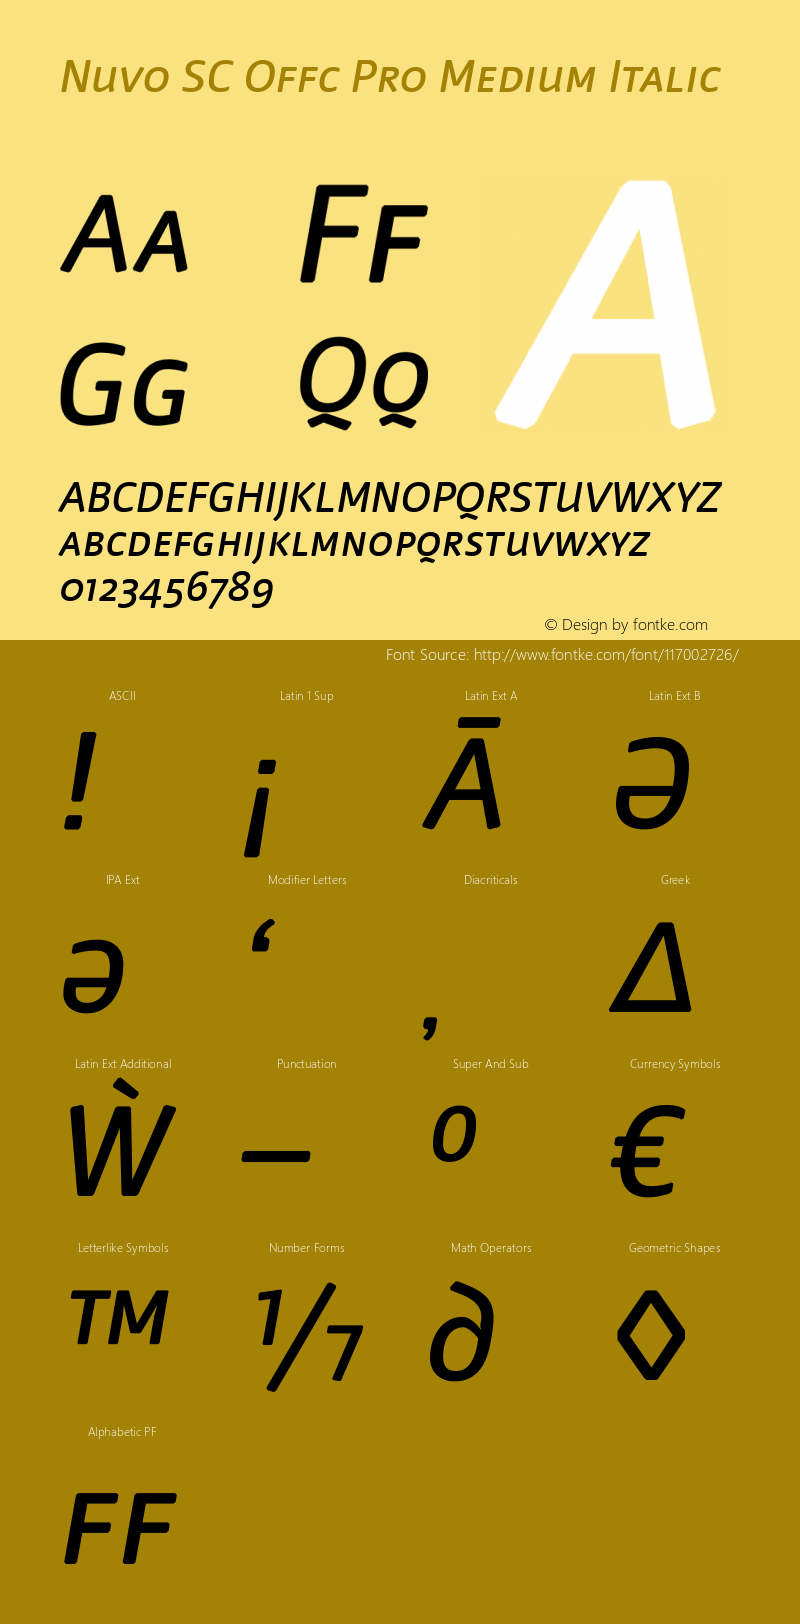 Nuvo SC Offc Pro Medium Italic Version 7.504; 2009; Build 1020 Font Sample